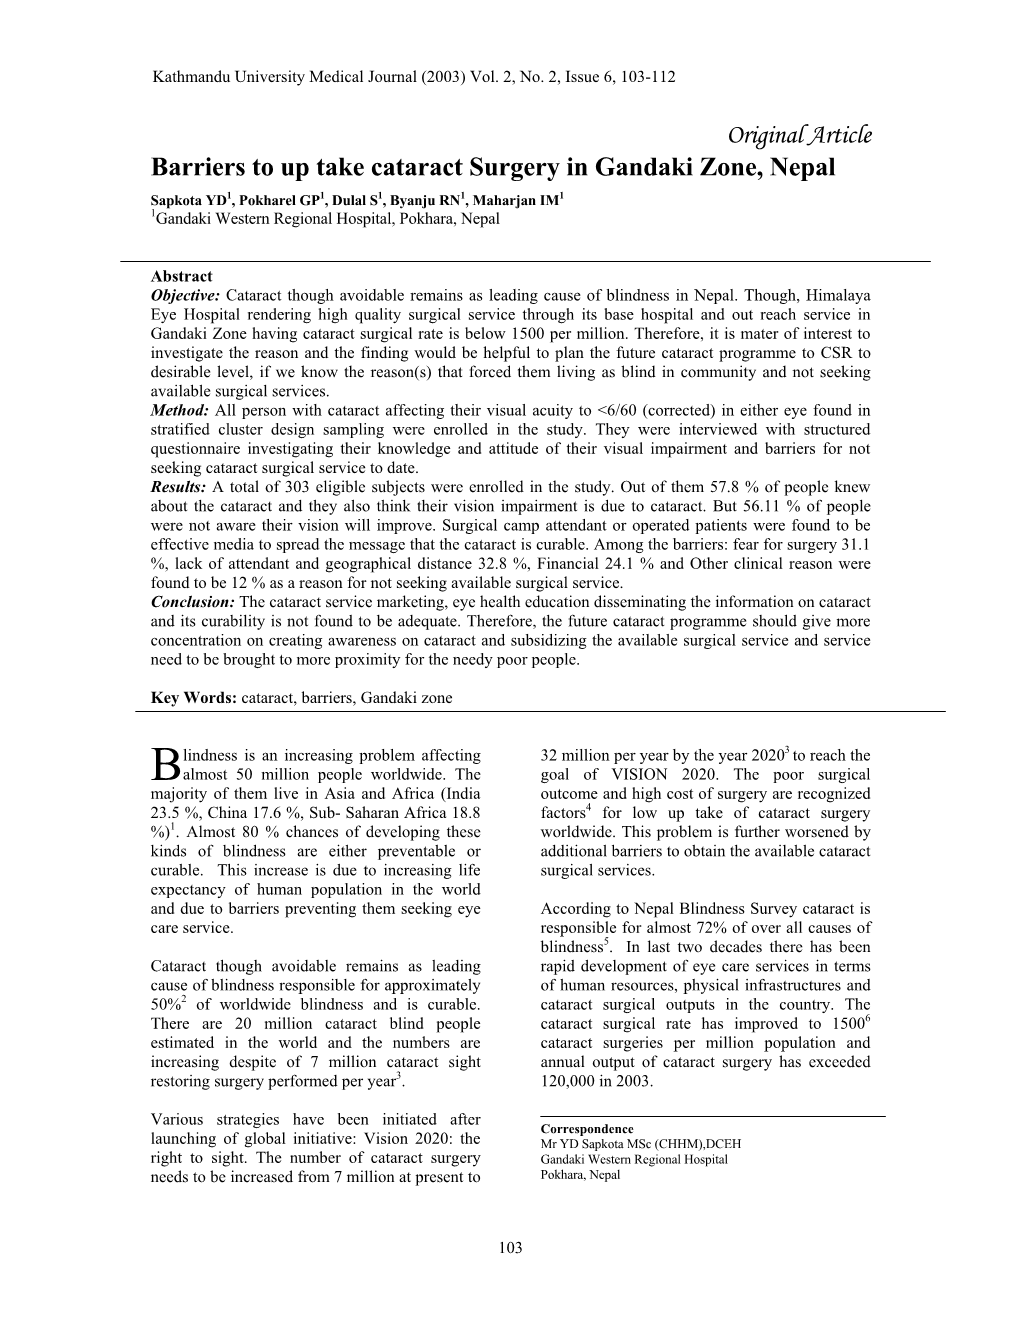 Original Article Barriers to up Take Cataract Surgery in Gandaki Zone